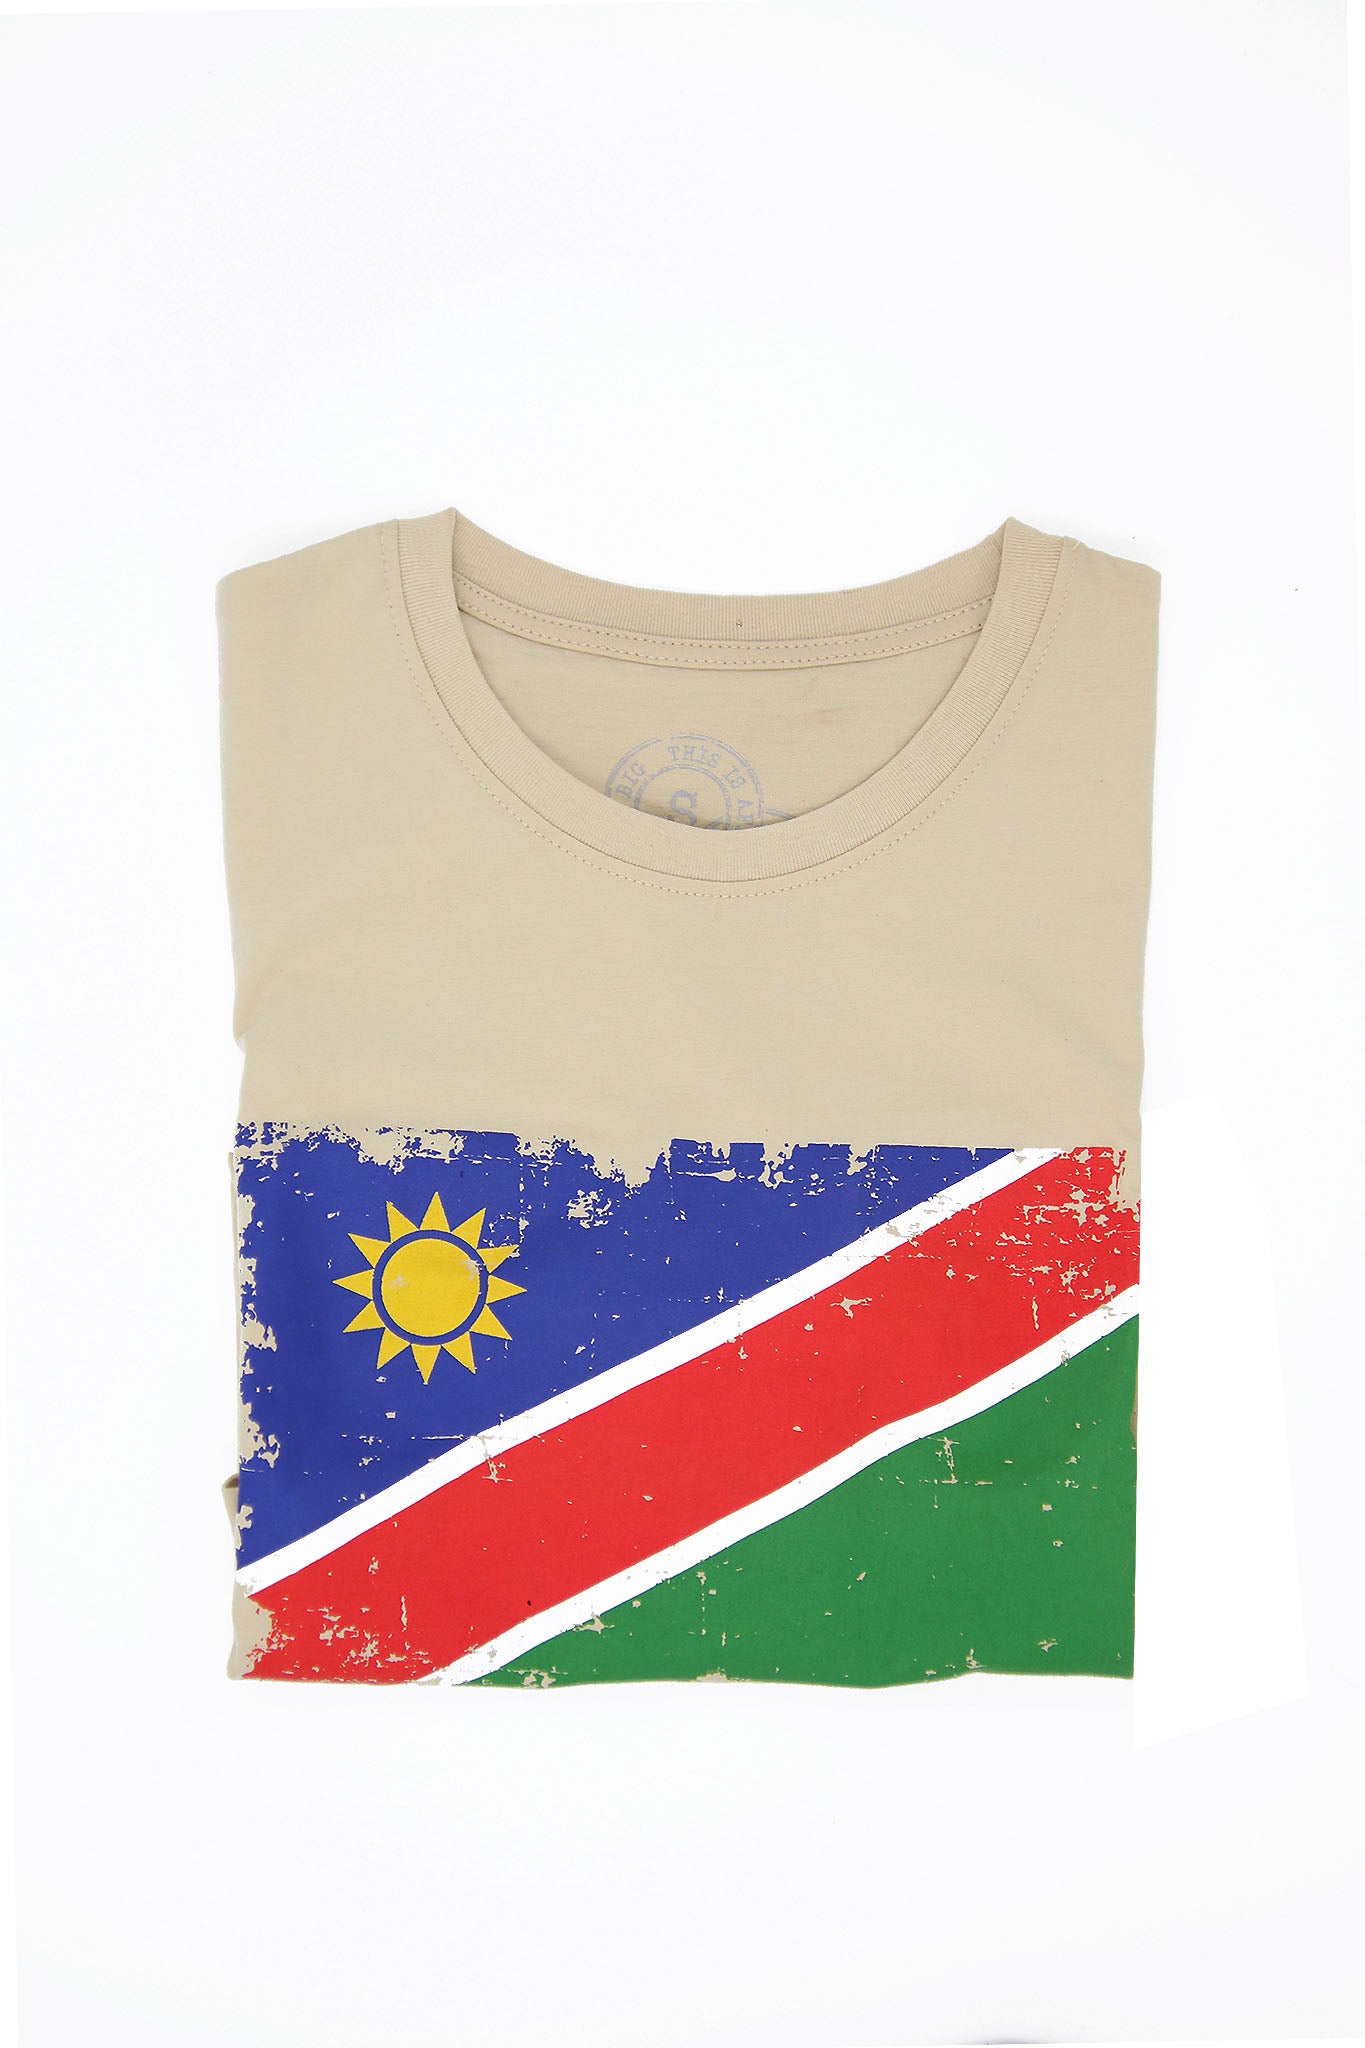 Namibian Flag, Cotton T-shirt